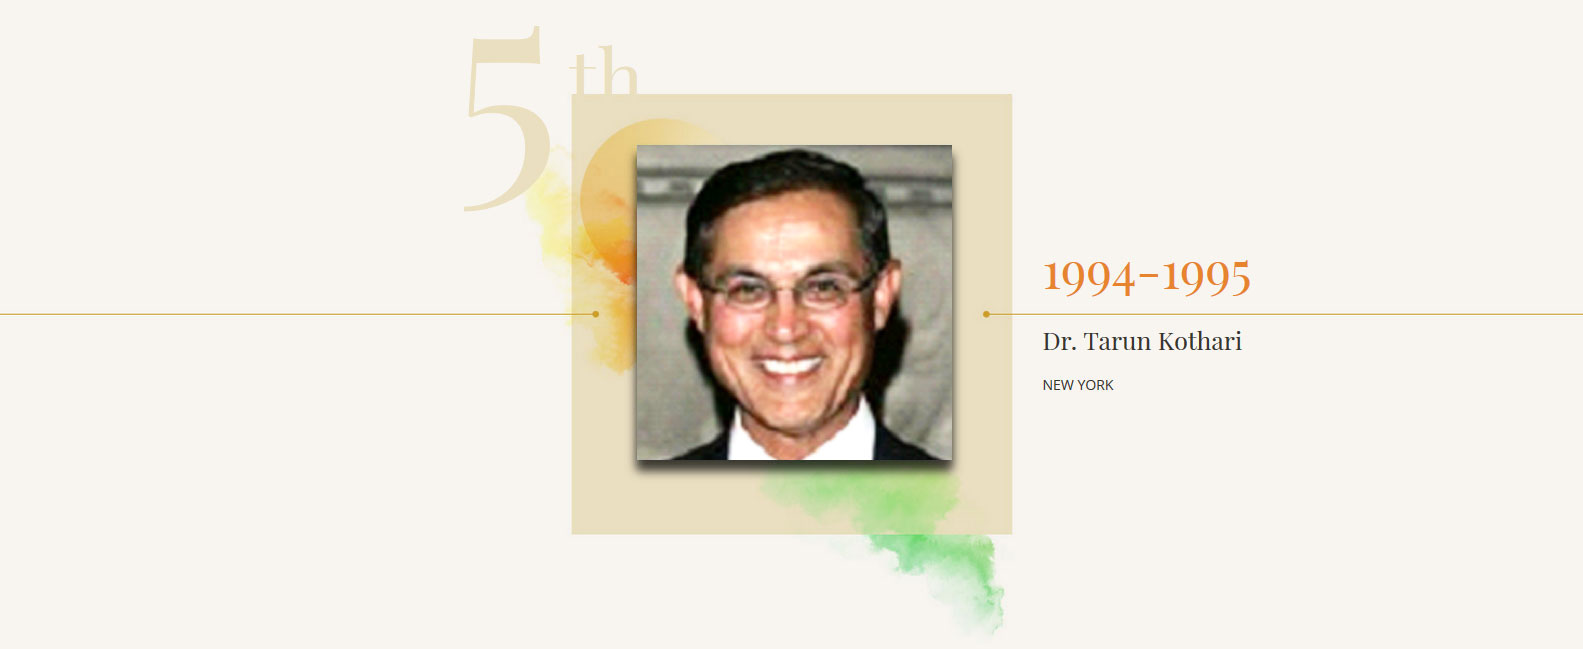 Dr. Tarun Kothari